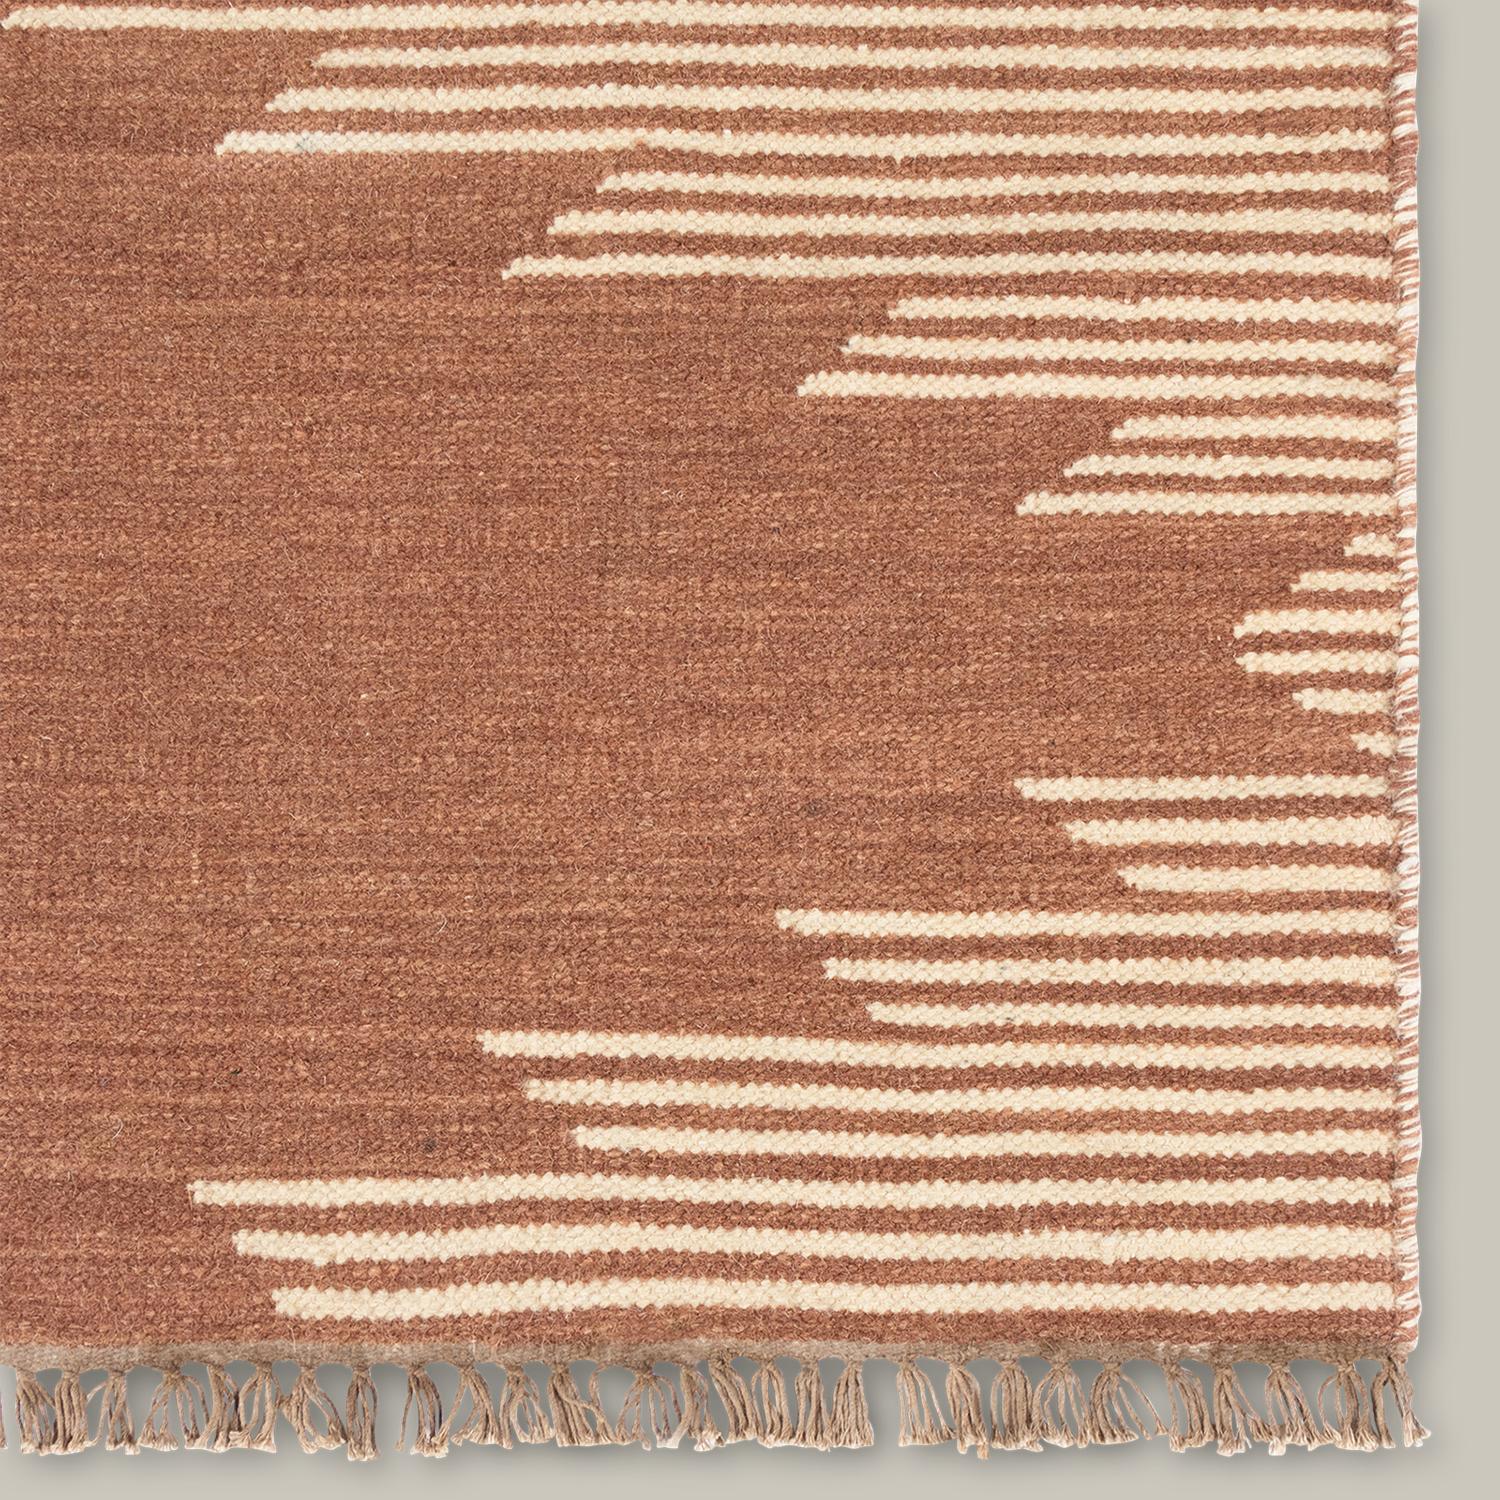 Hand-Woven “Metlili Missira” Bespoke, Handwoven Wool Rug (Terracotta) by Christiane Lemieux For Sale